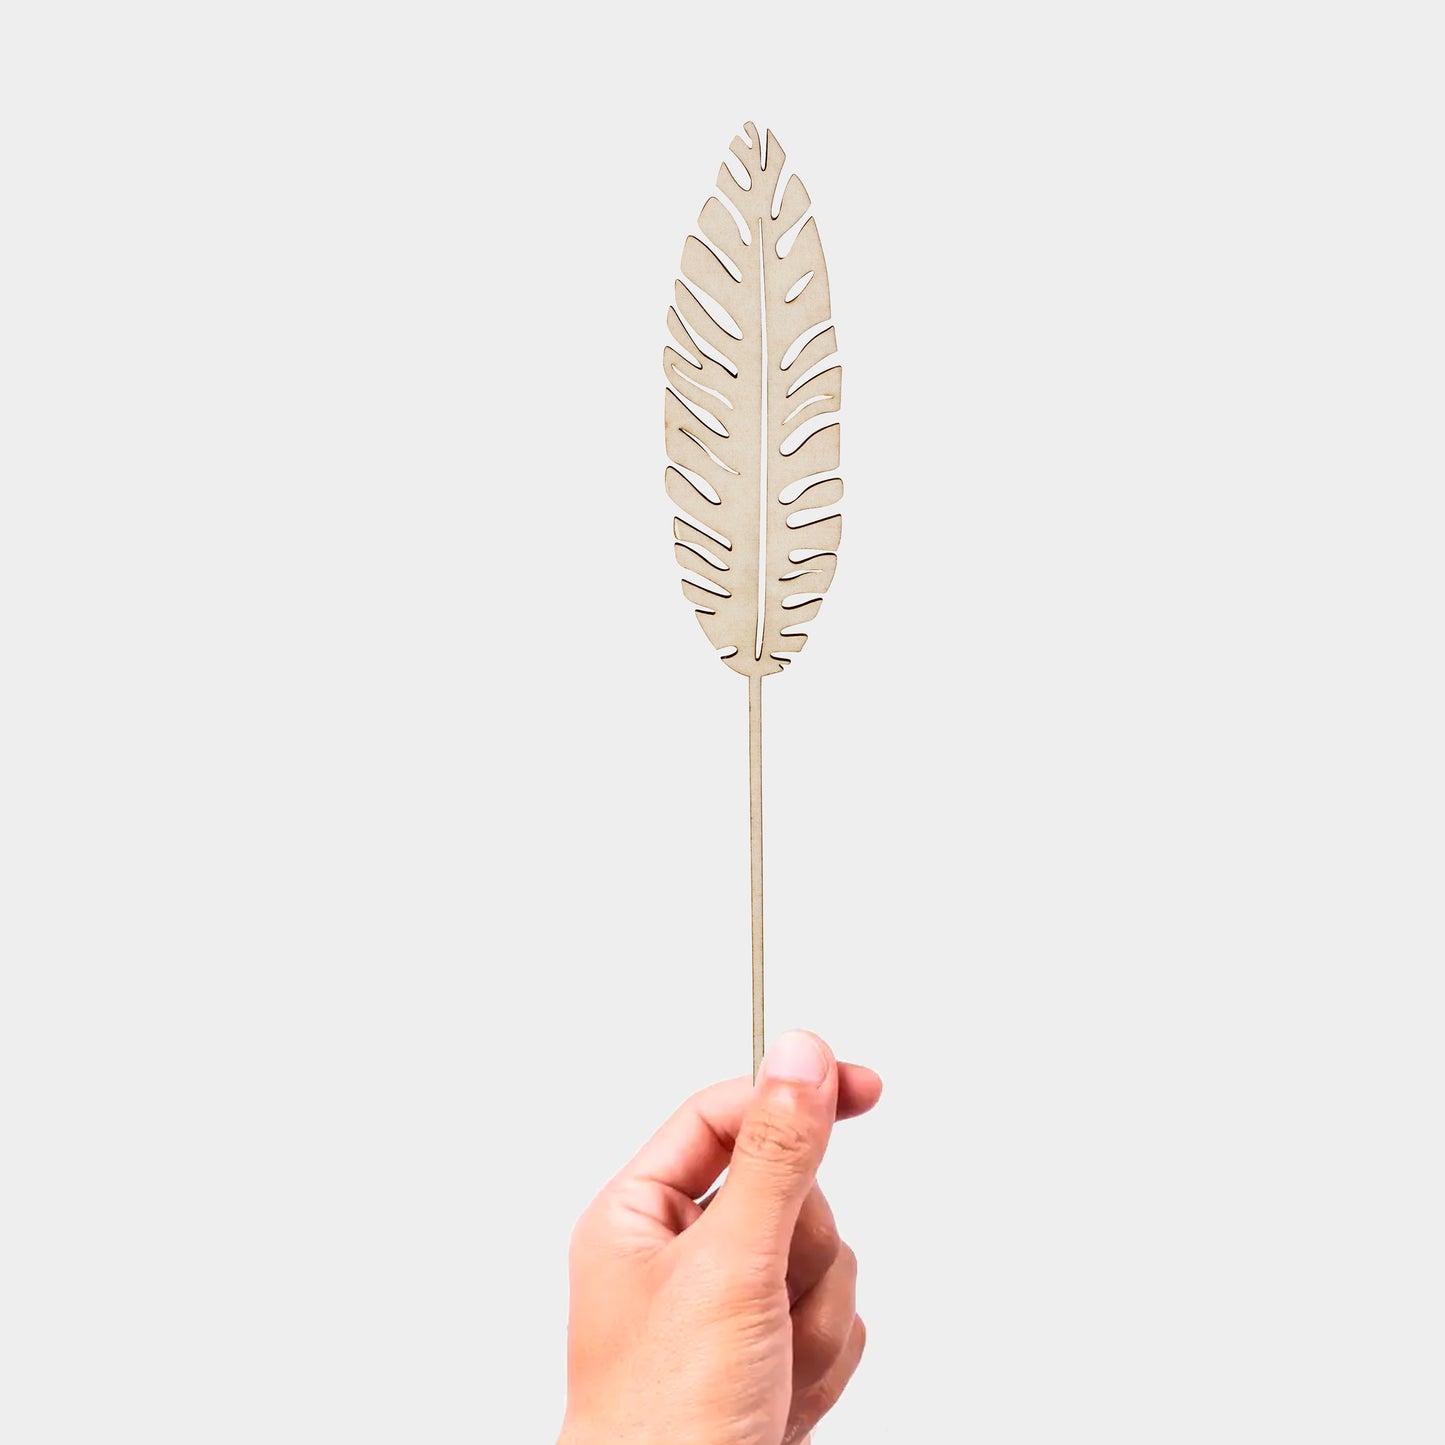 Palm leaf made of wood